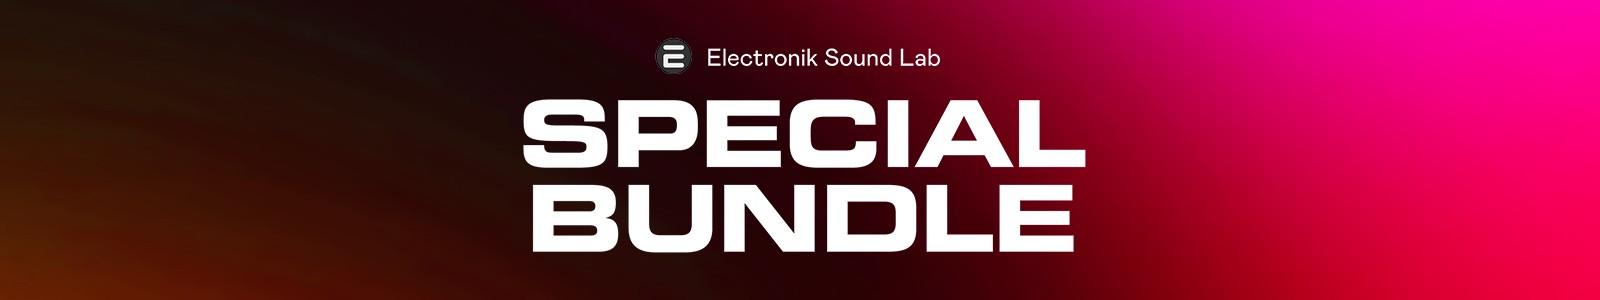 Gigantic Instrument Bundle by Electronik Sound Lab